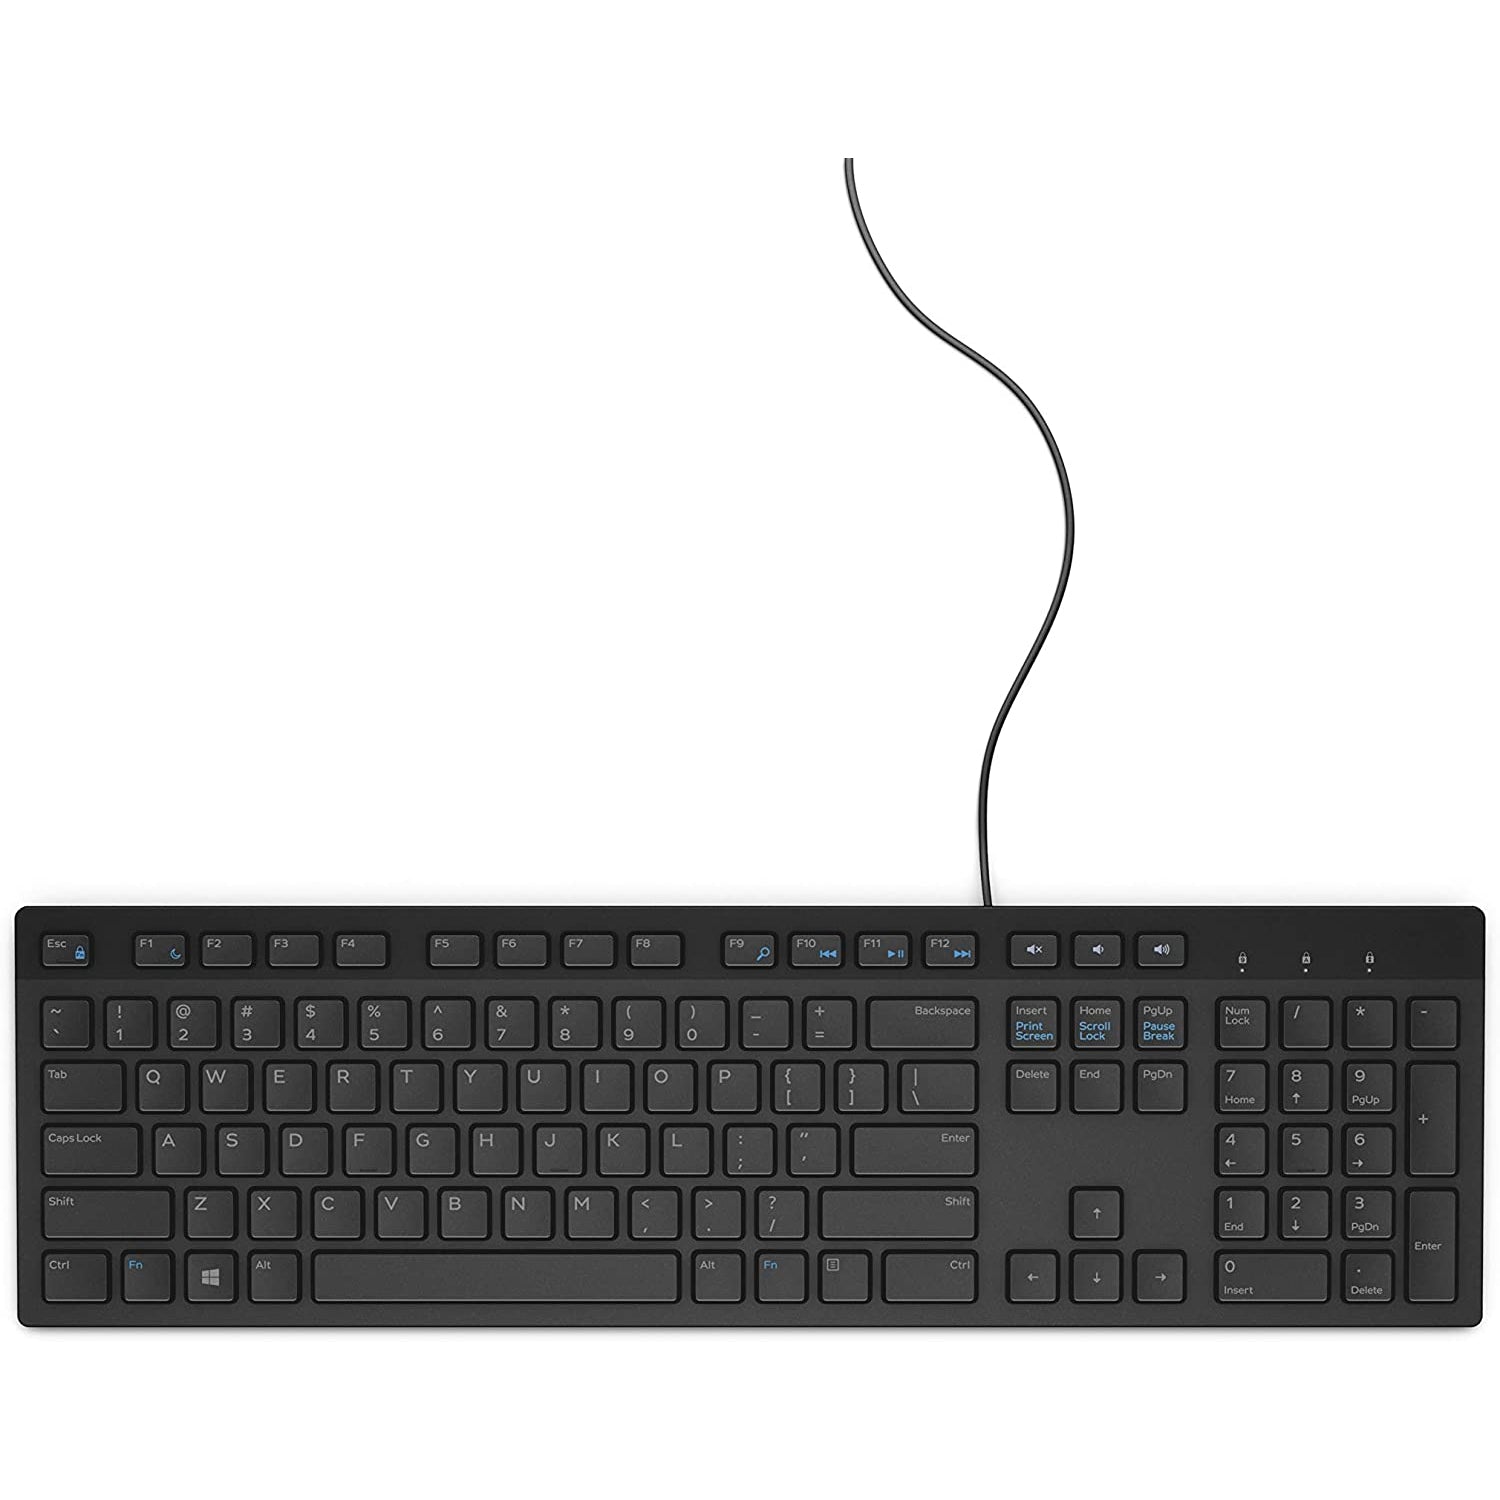 Dell Multimedia Keyboard KB216 PC / Mac Keyboard - Black - Refurbished Good